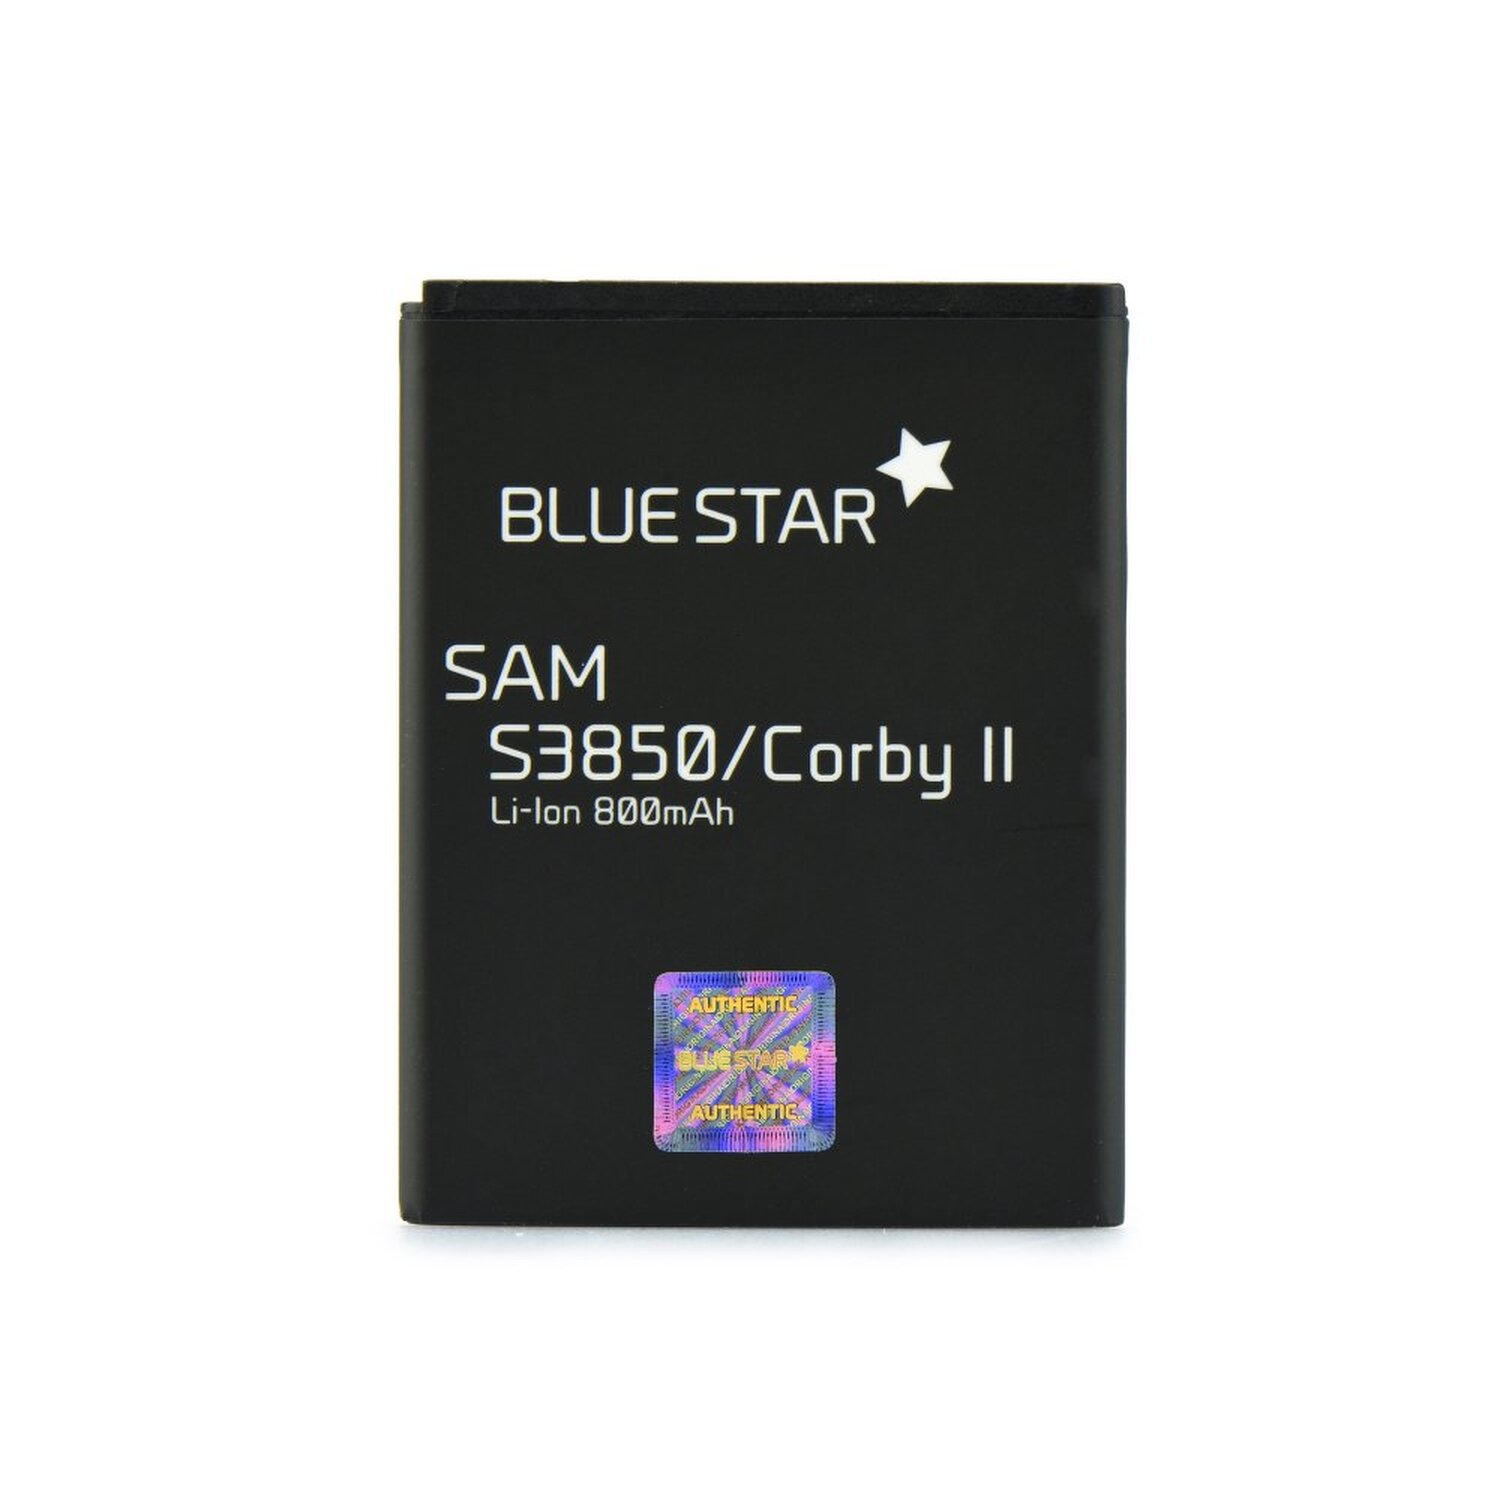 BLUESTAR Akku für Samsung 335 Chat Handyakku II Corby / S3850 Li-Ion